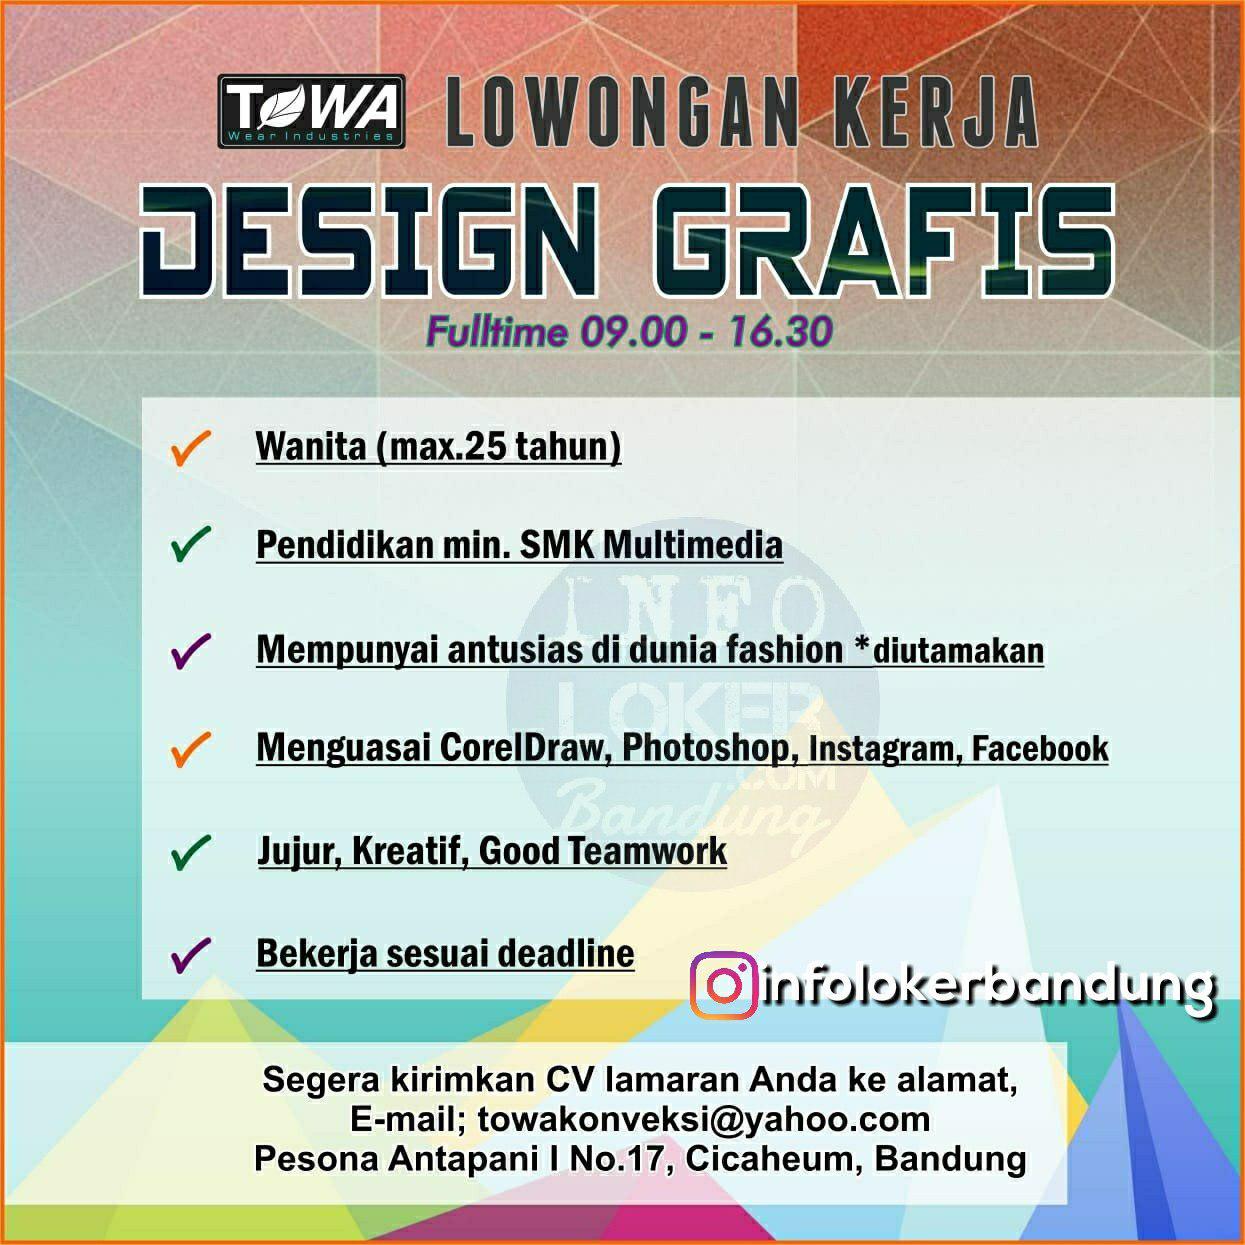 Lowongan Kerja Towa Wear Industries Bandung Agustus 2018